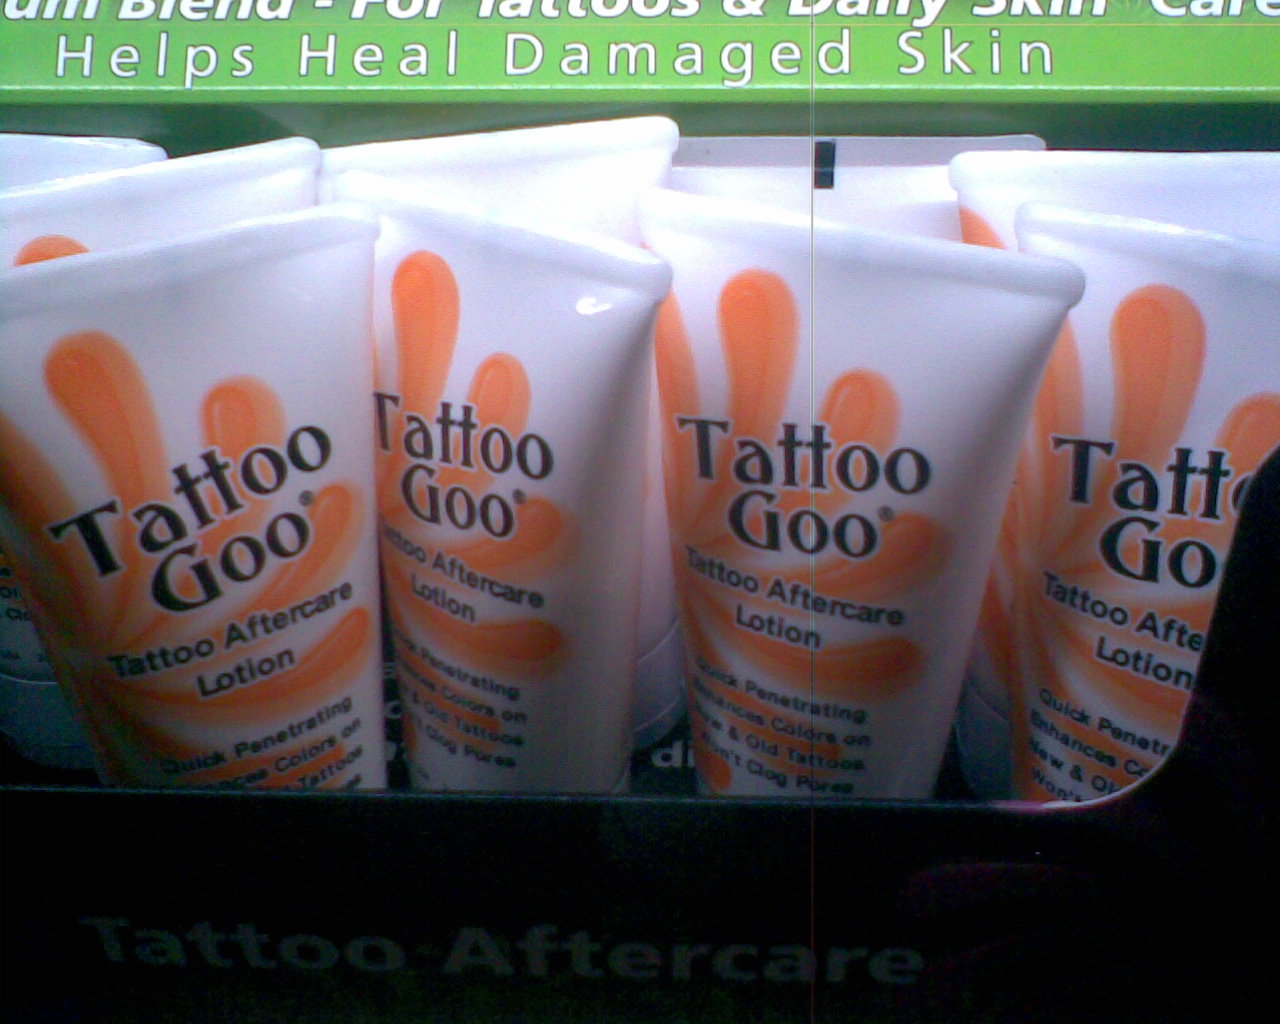 Tattoo Goo Lotion Ingredients